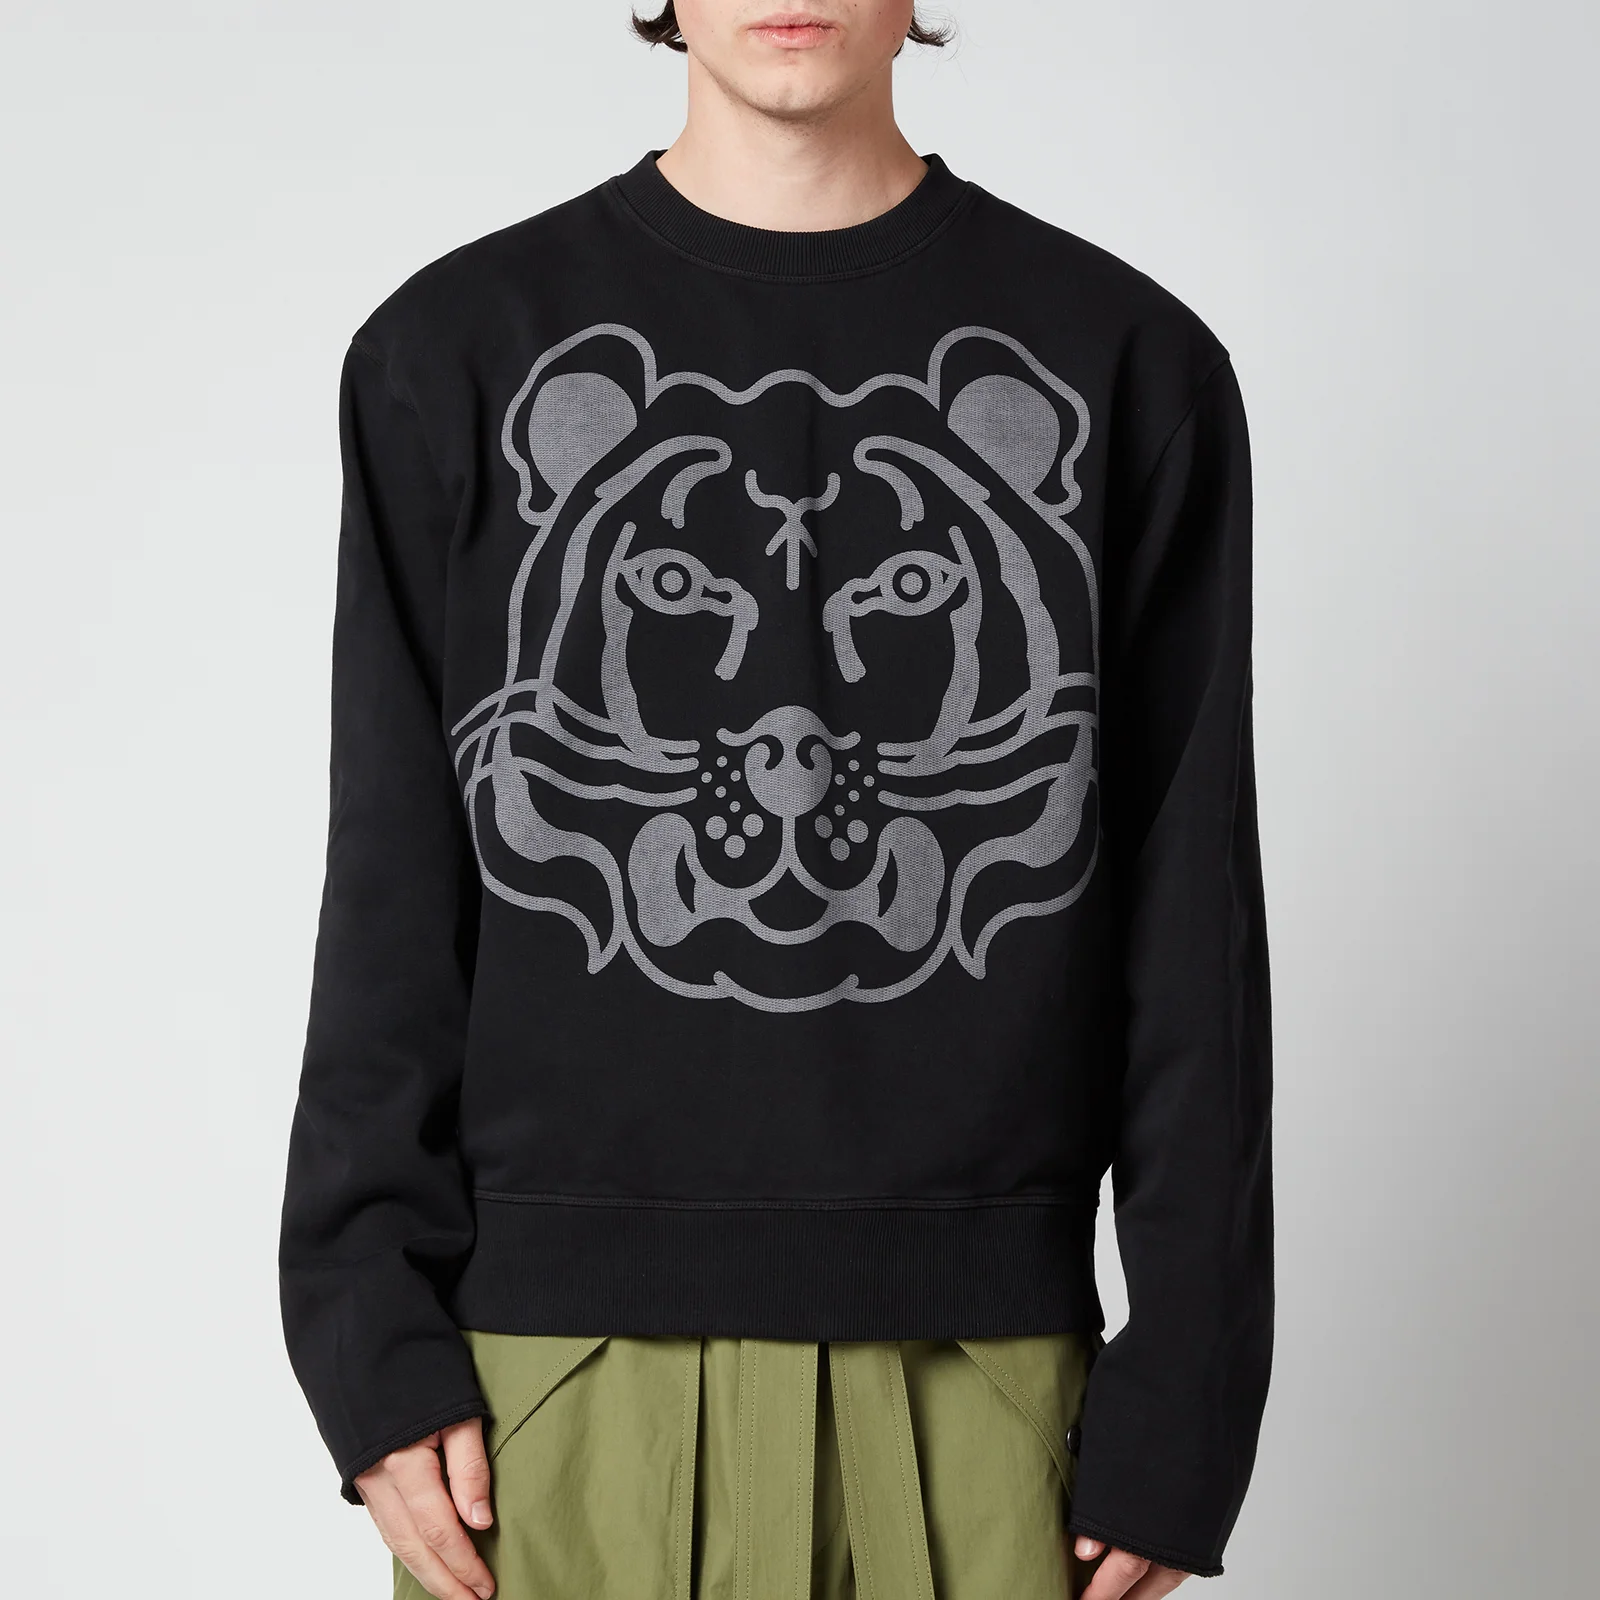 KENZO Men's Monochrome Tiger Sweatshirt - Black Image 1